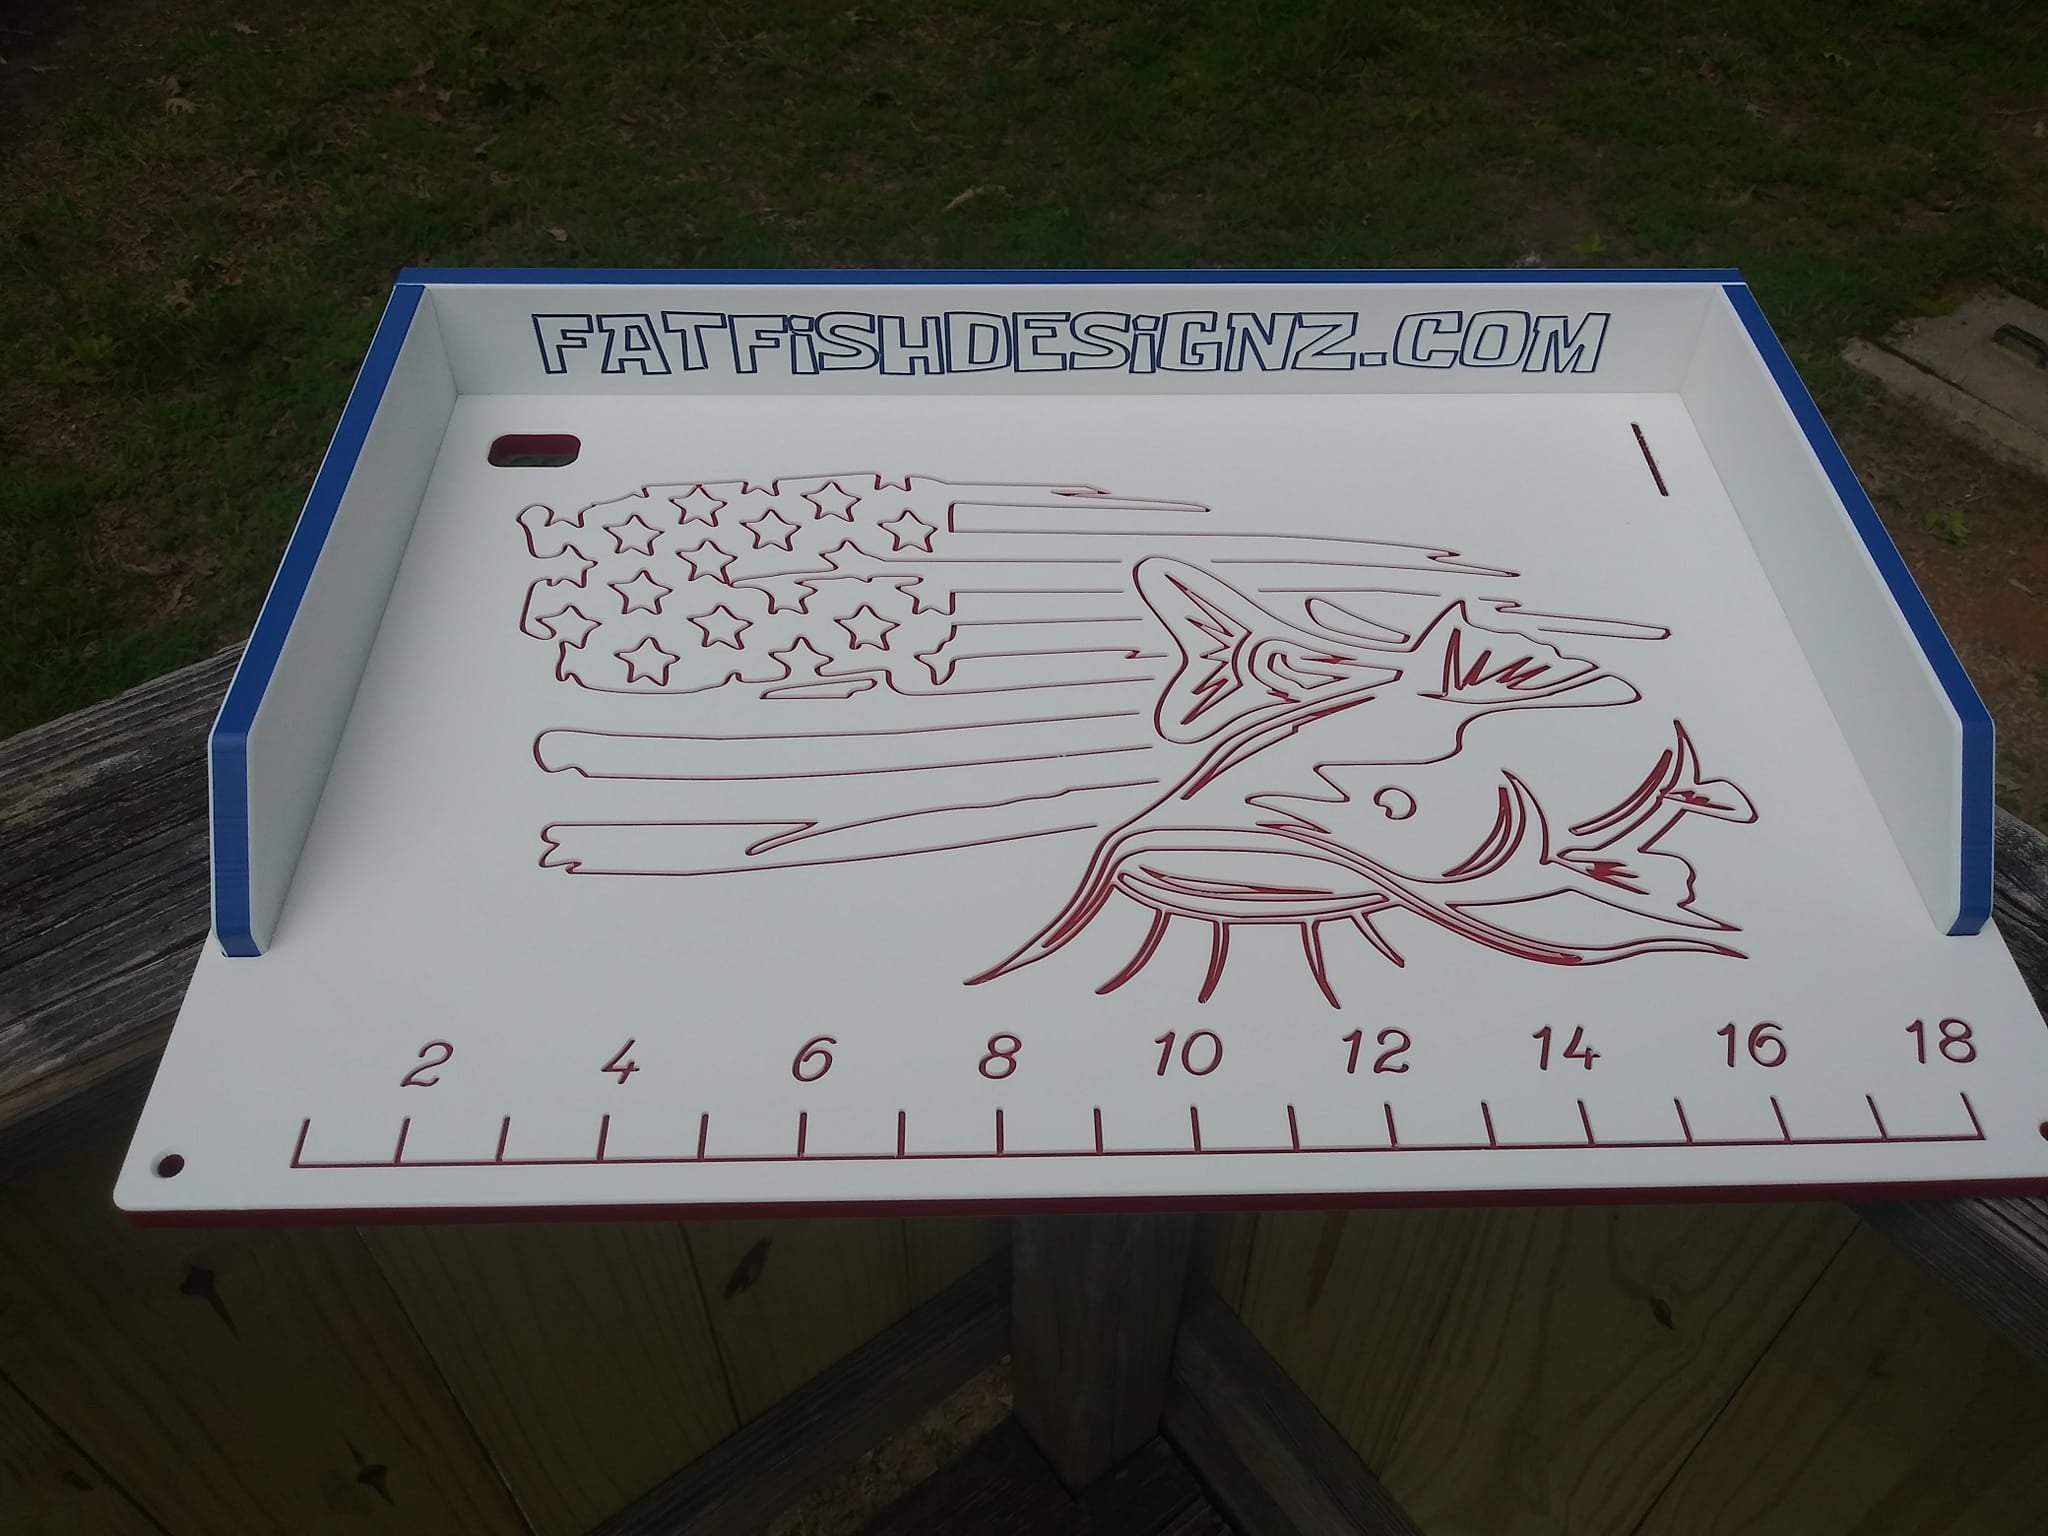 14x20-cutting board/ bait board - freedom fish design, red white blue theme from fat fish designz